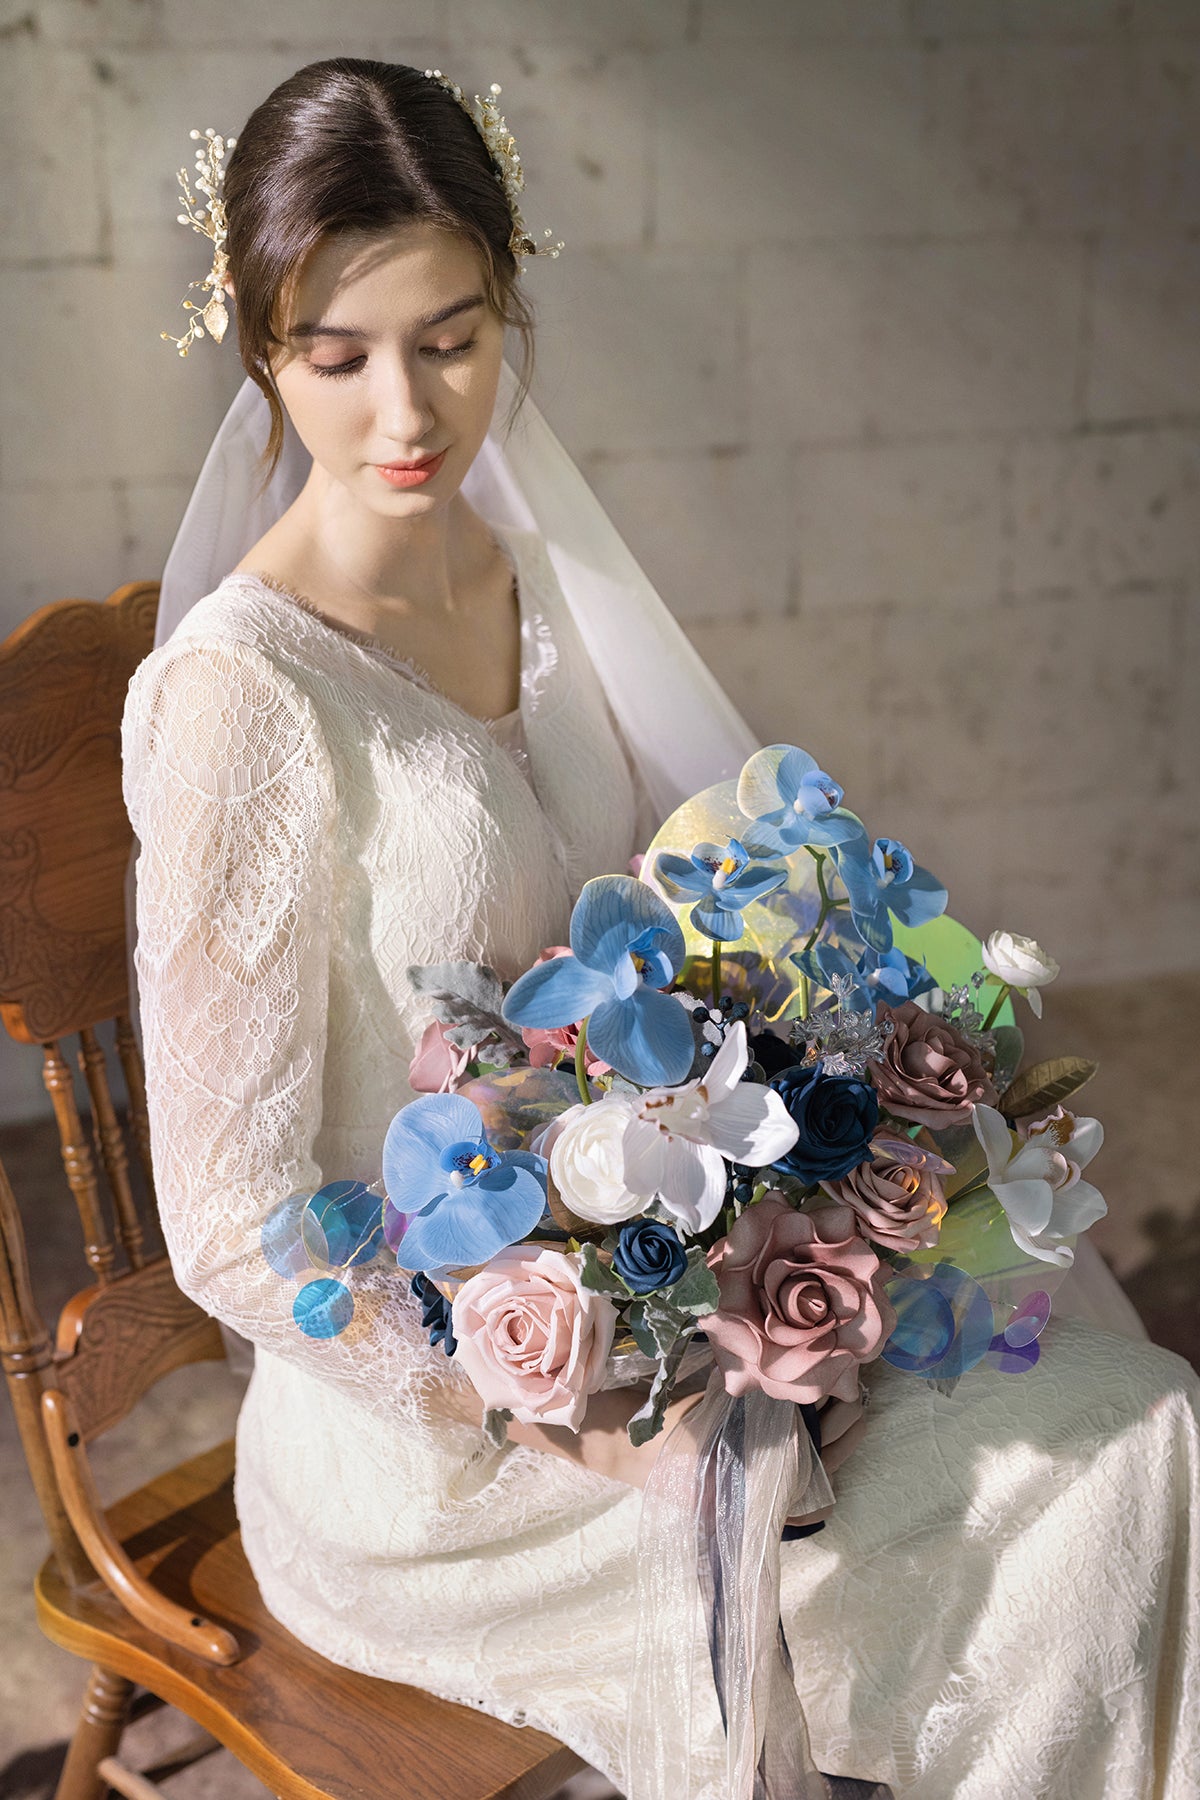 Flash Sale | Medium Free-Form Bridal Bouquet in Dusty Rose & Navy